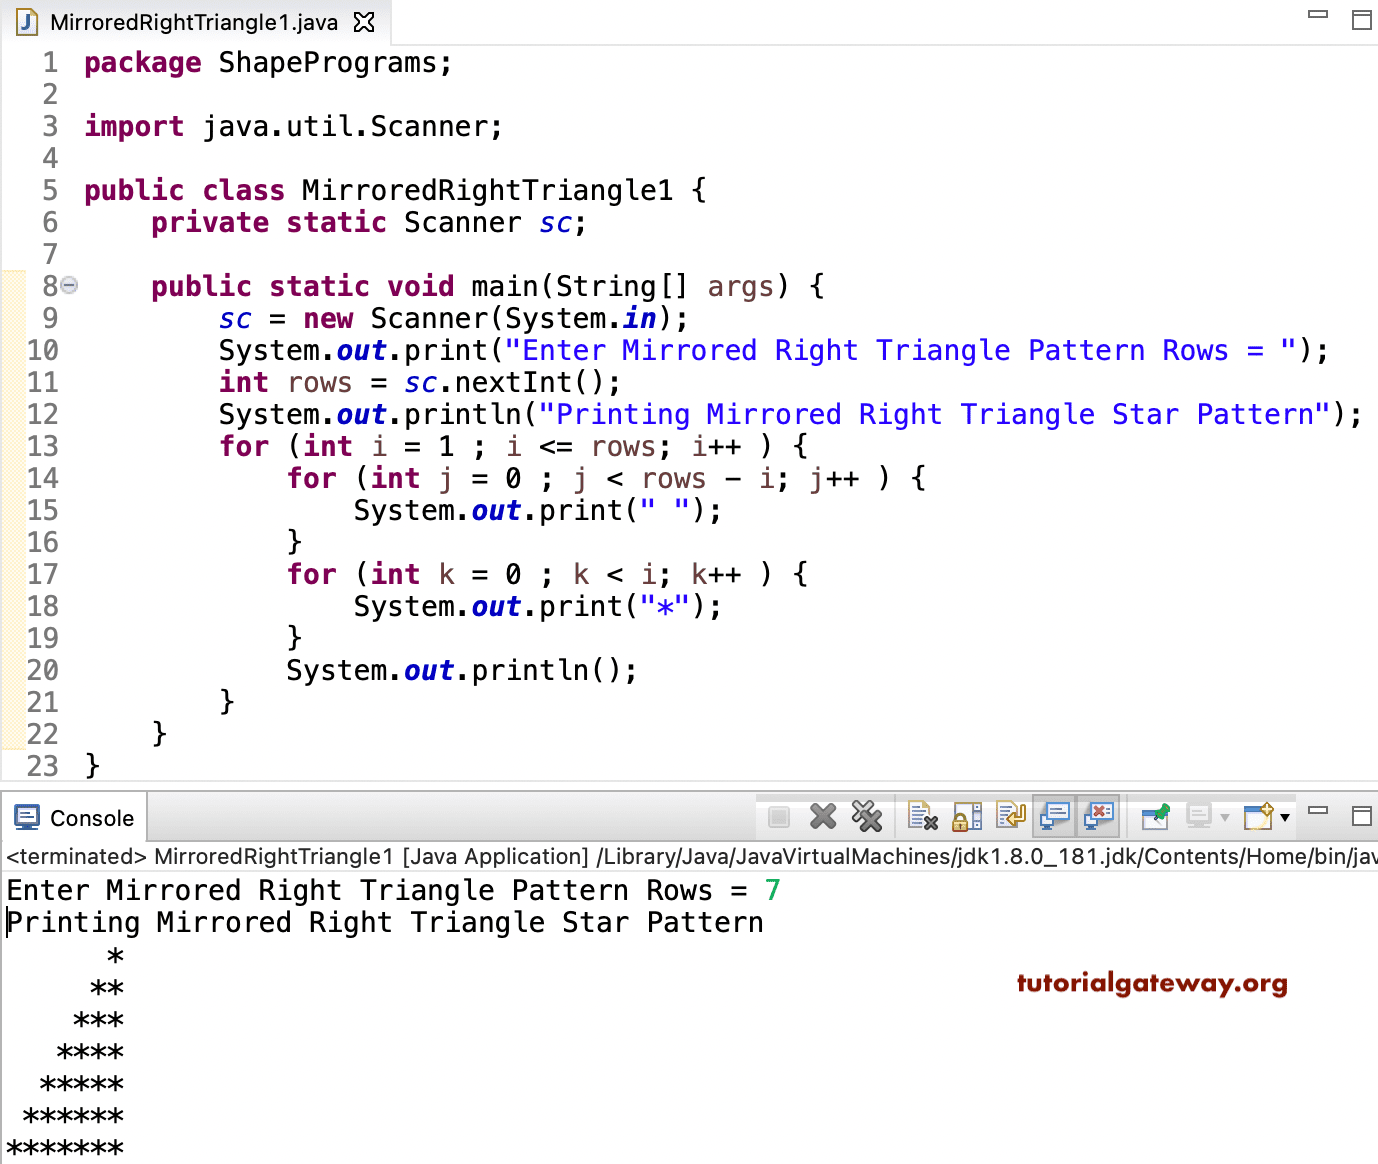 Java Program to Print Mirrored Right Triangle Star Pattern 1